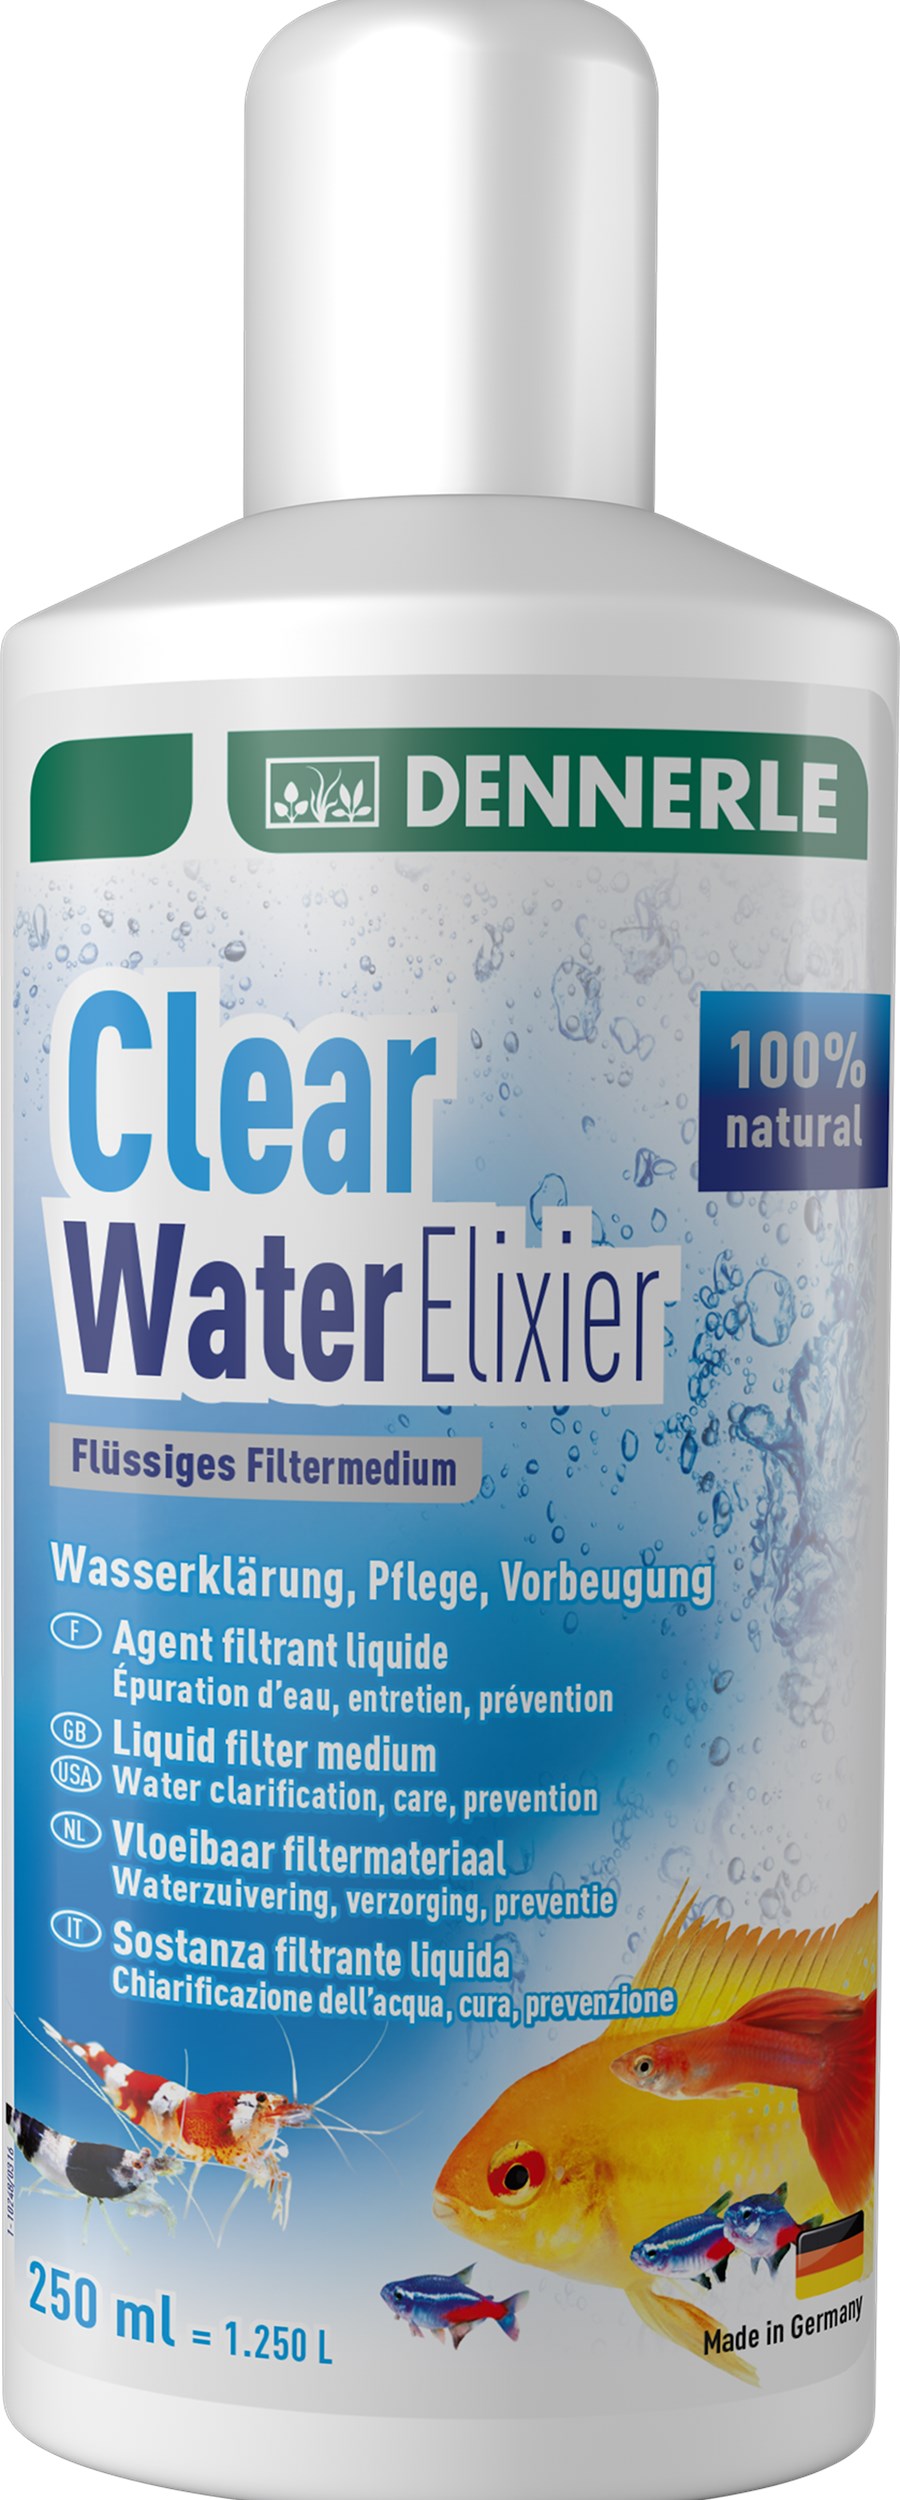 Clear Water Elixier 250 ml